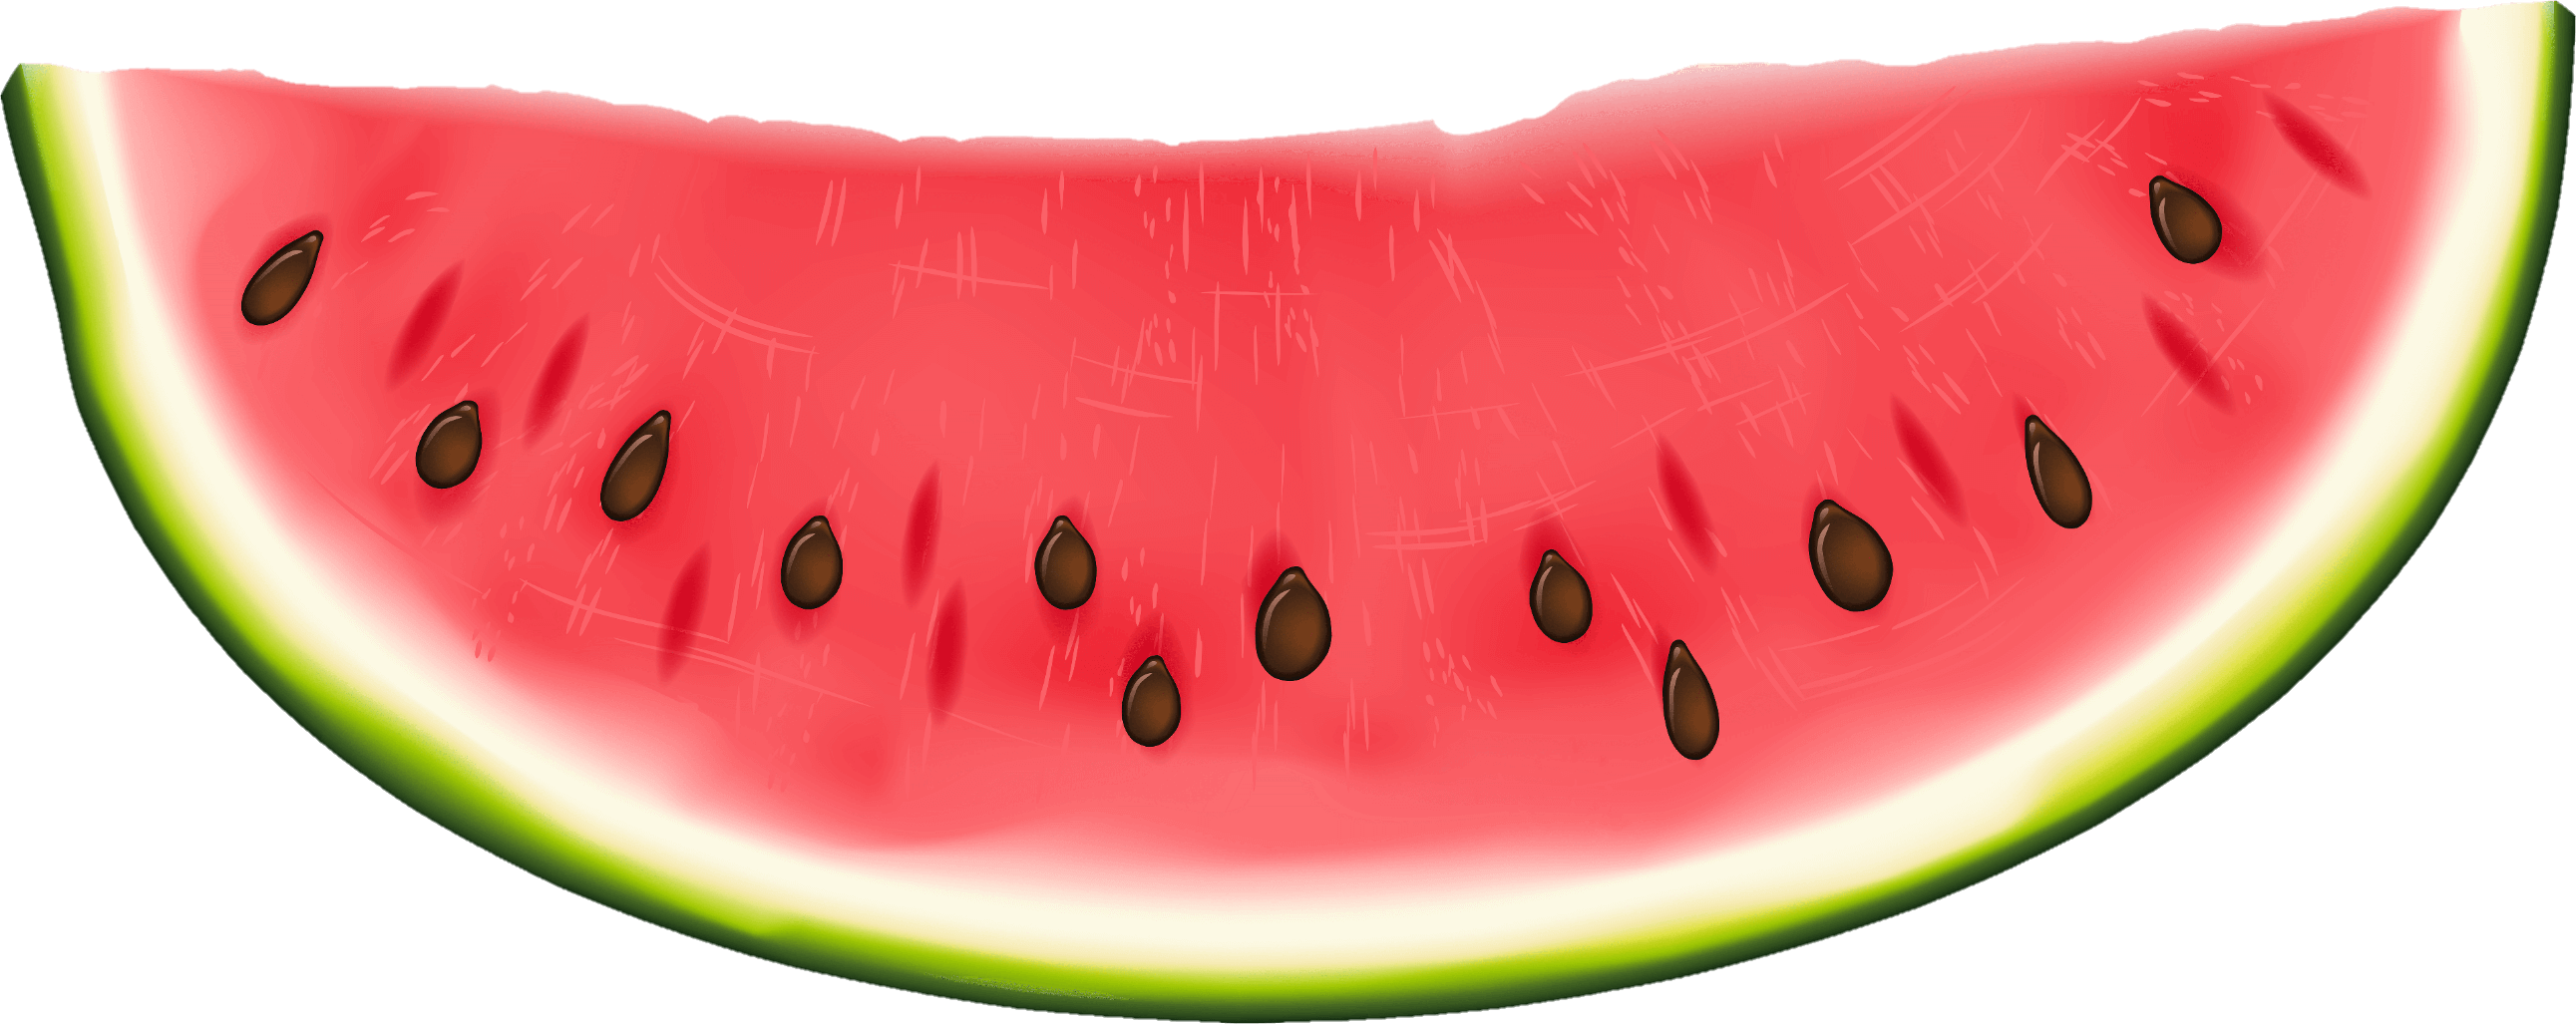 watermelon-34